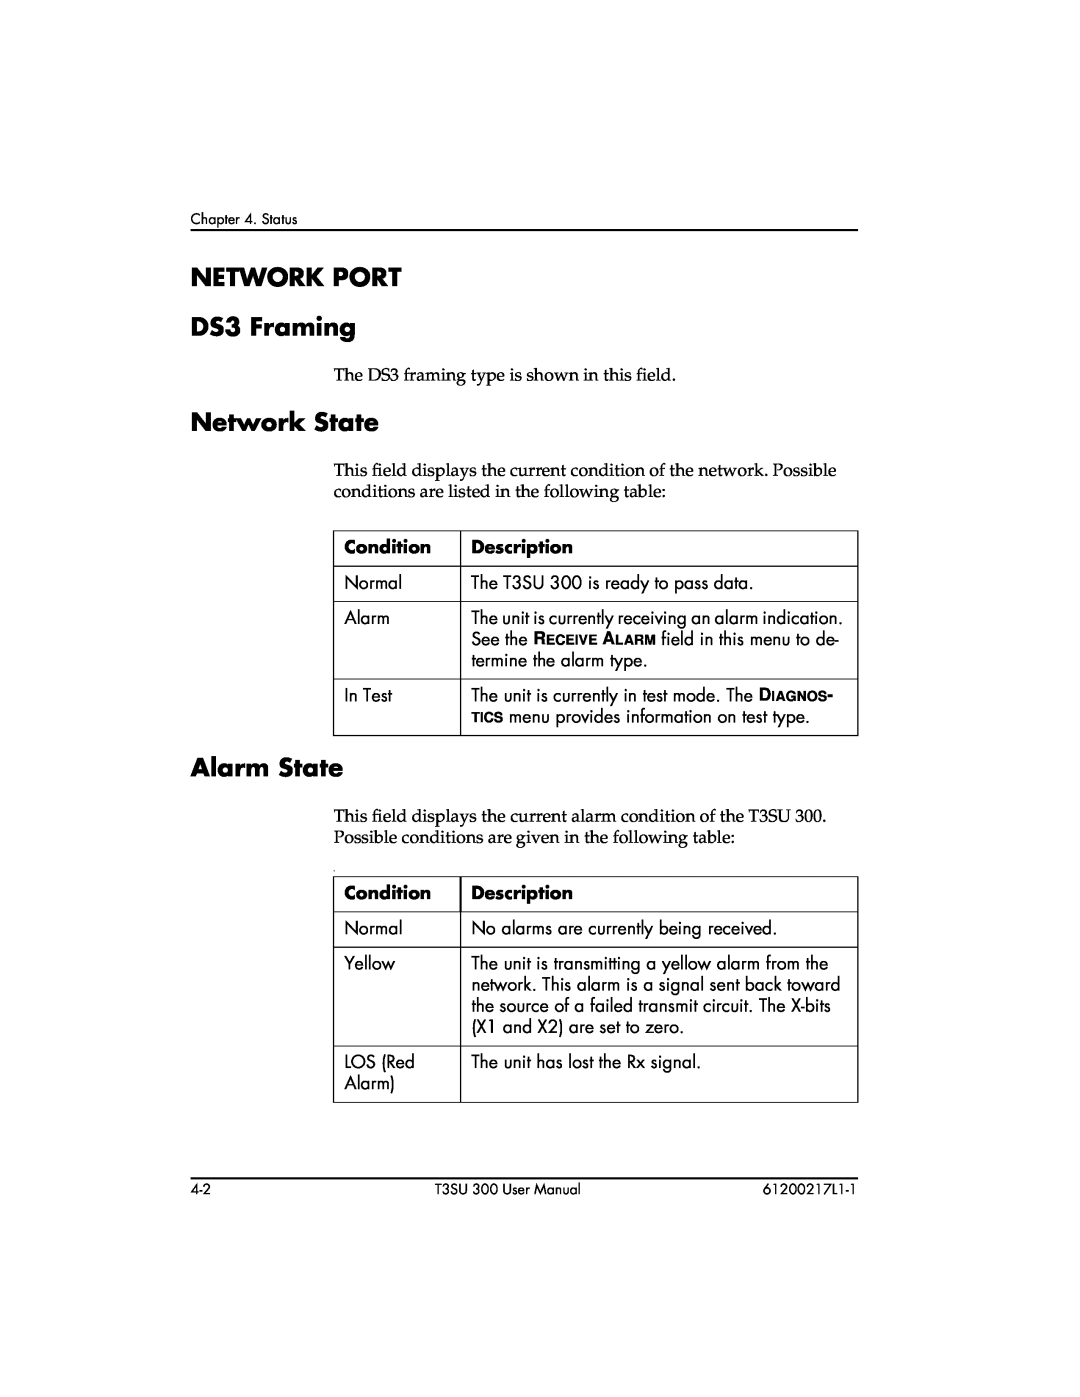 ADTRAN T3SU 300 user manual NETWORK PORT DS3 Framing, Network State, Alarm State, Description, Condition 